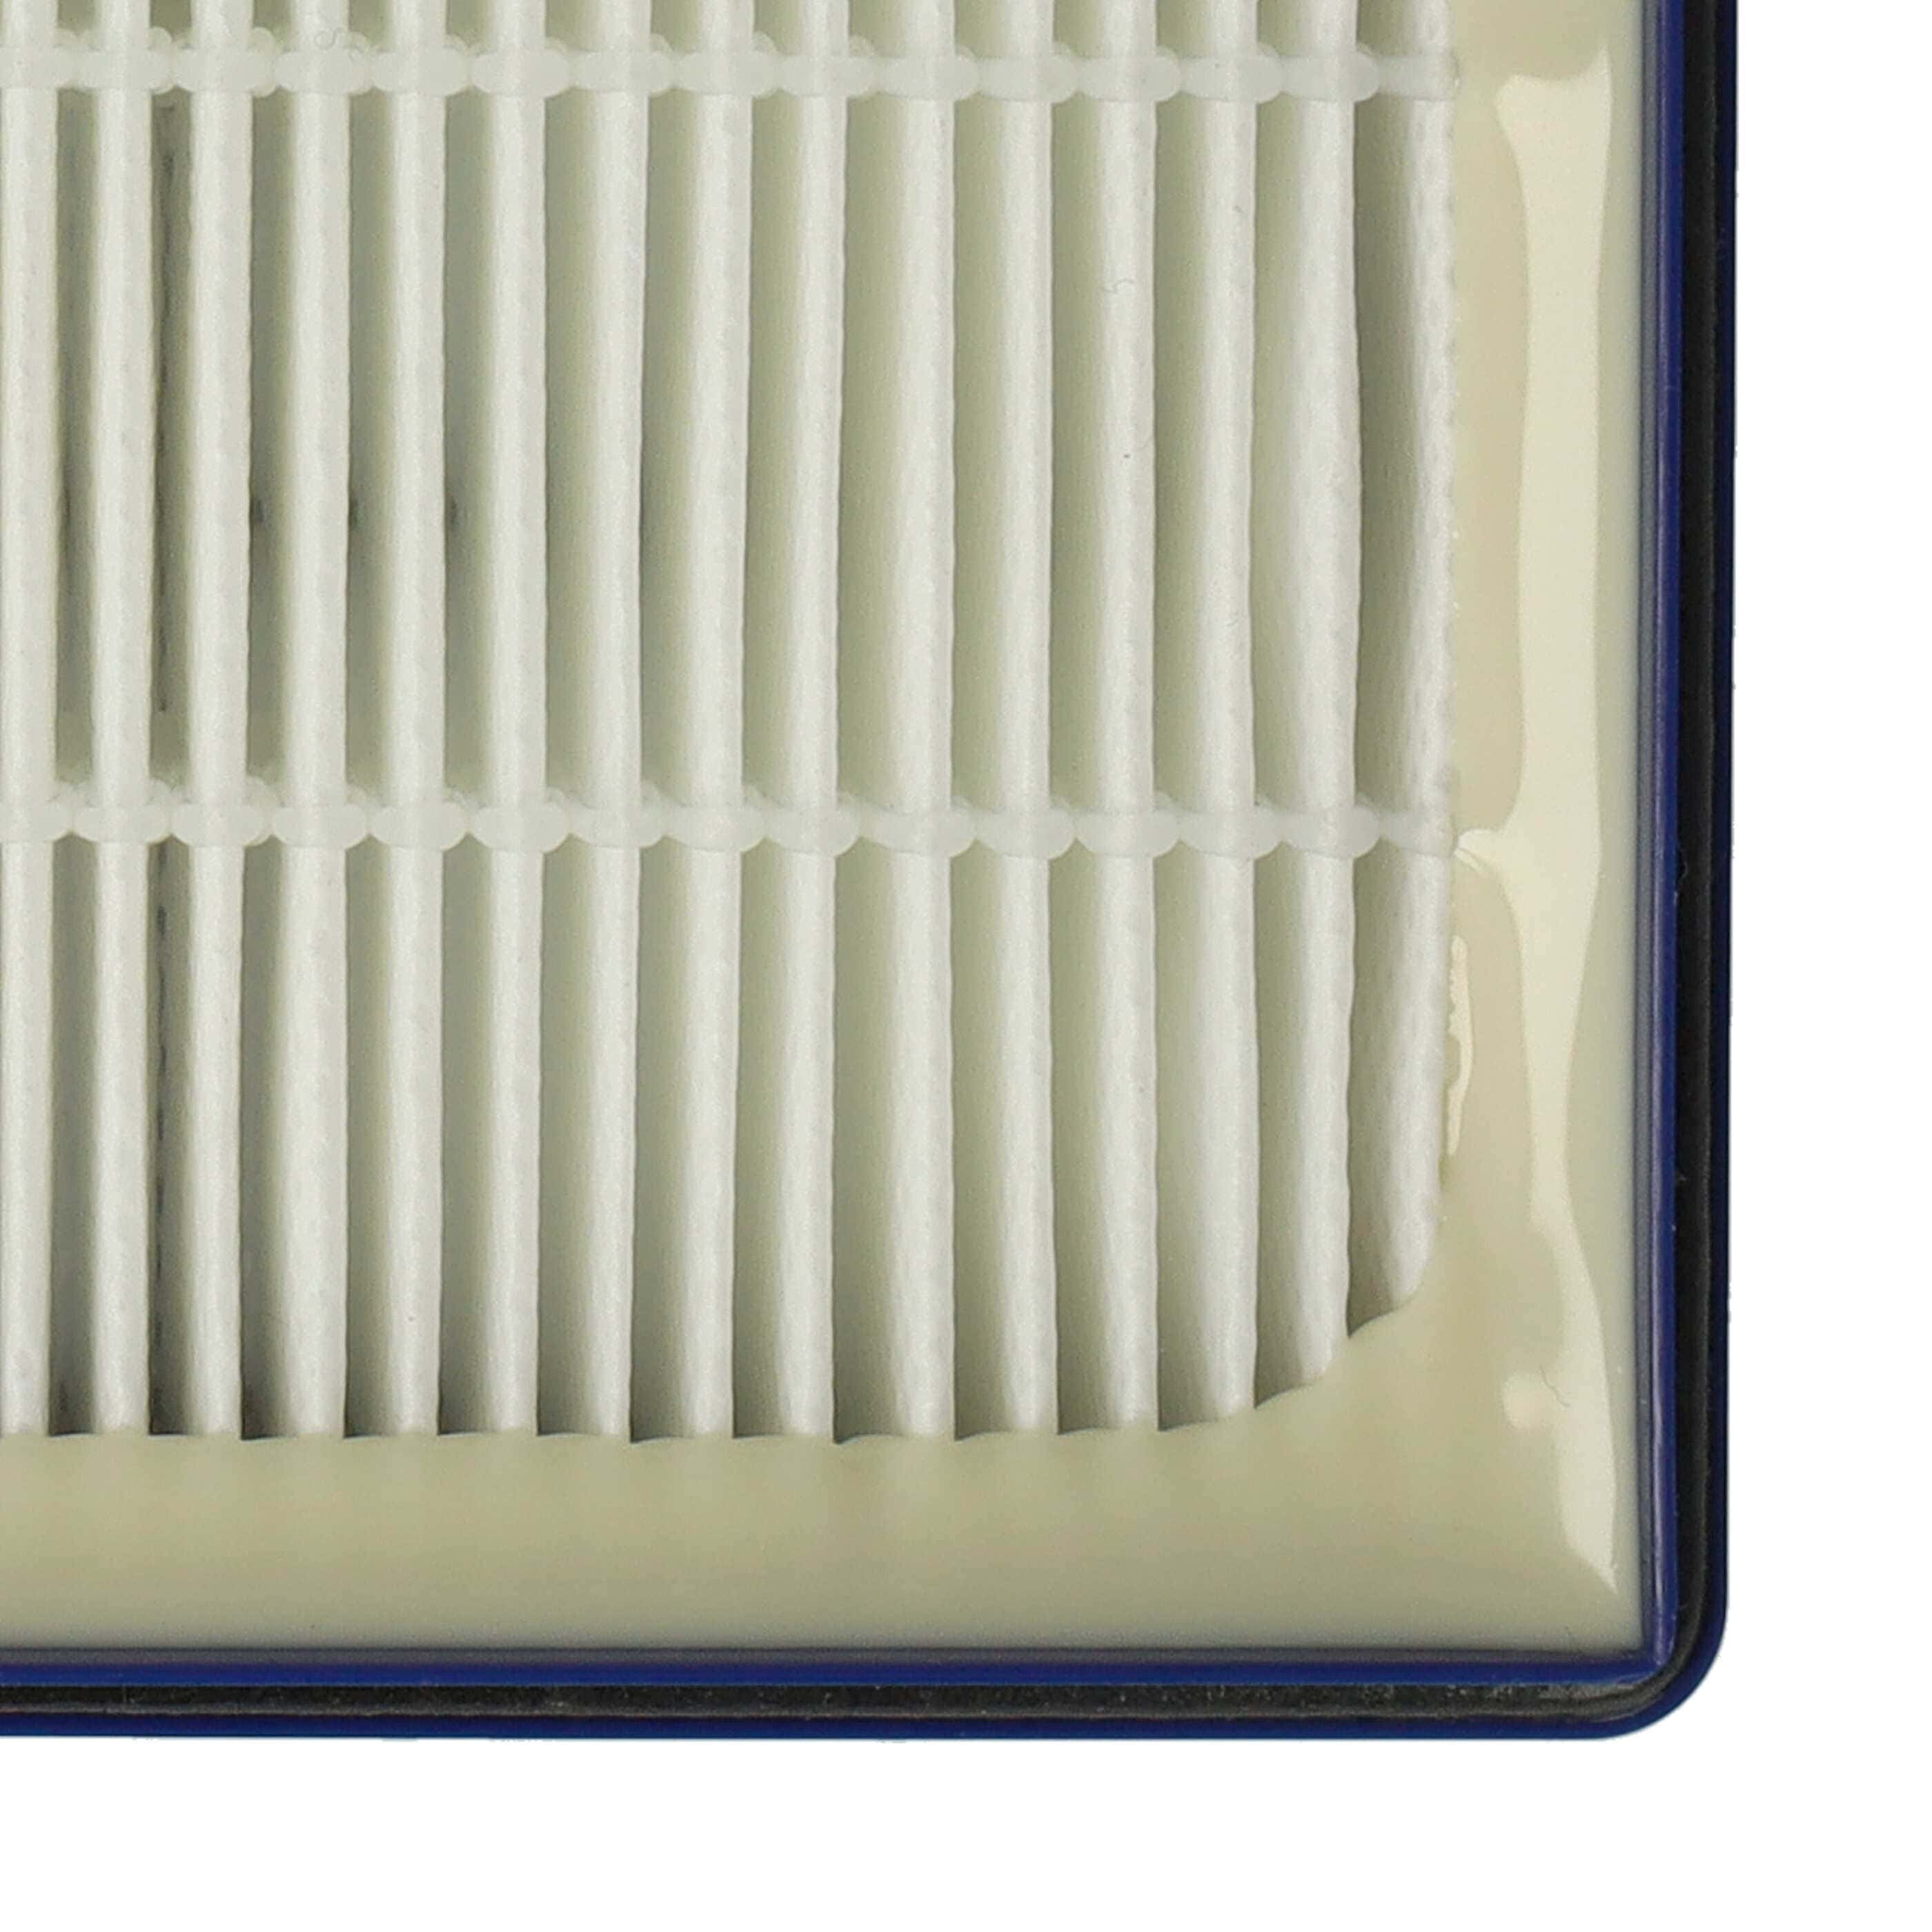 Filtro reemplaza Nilfisk 147 0432 500 para aspiradora - filtro Hepa blanco / azul